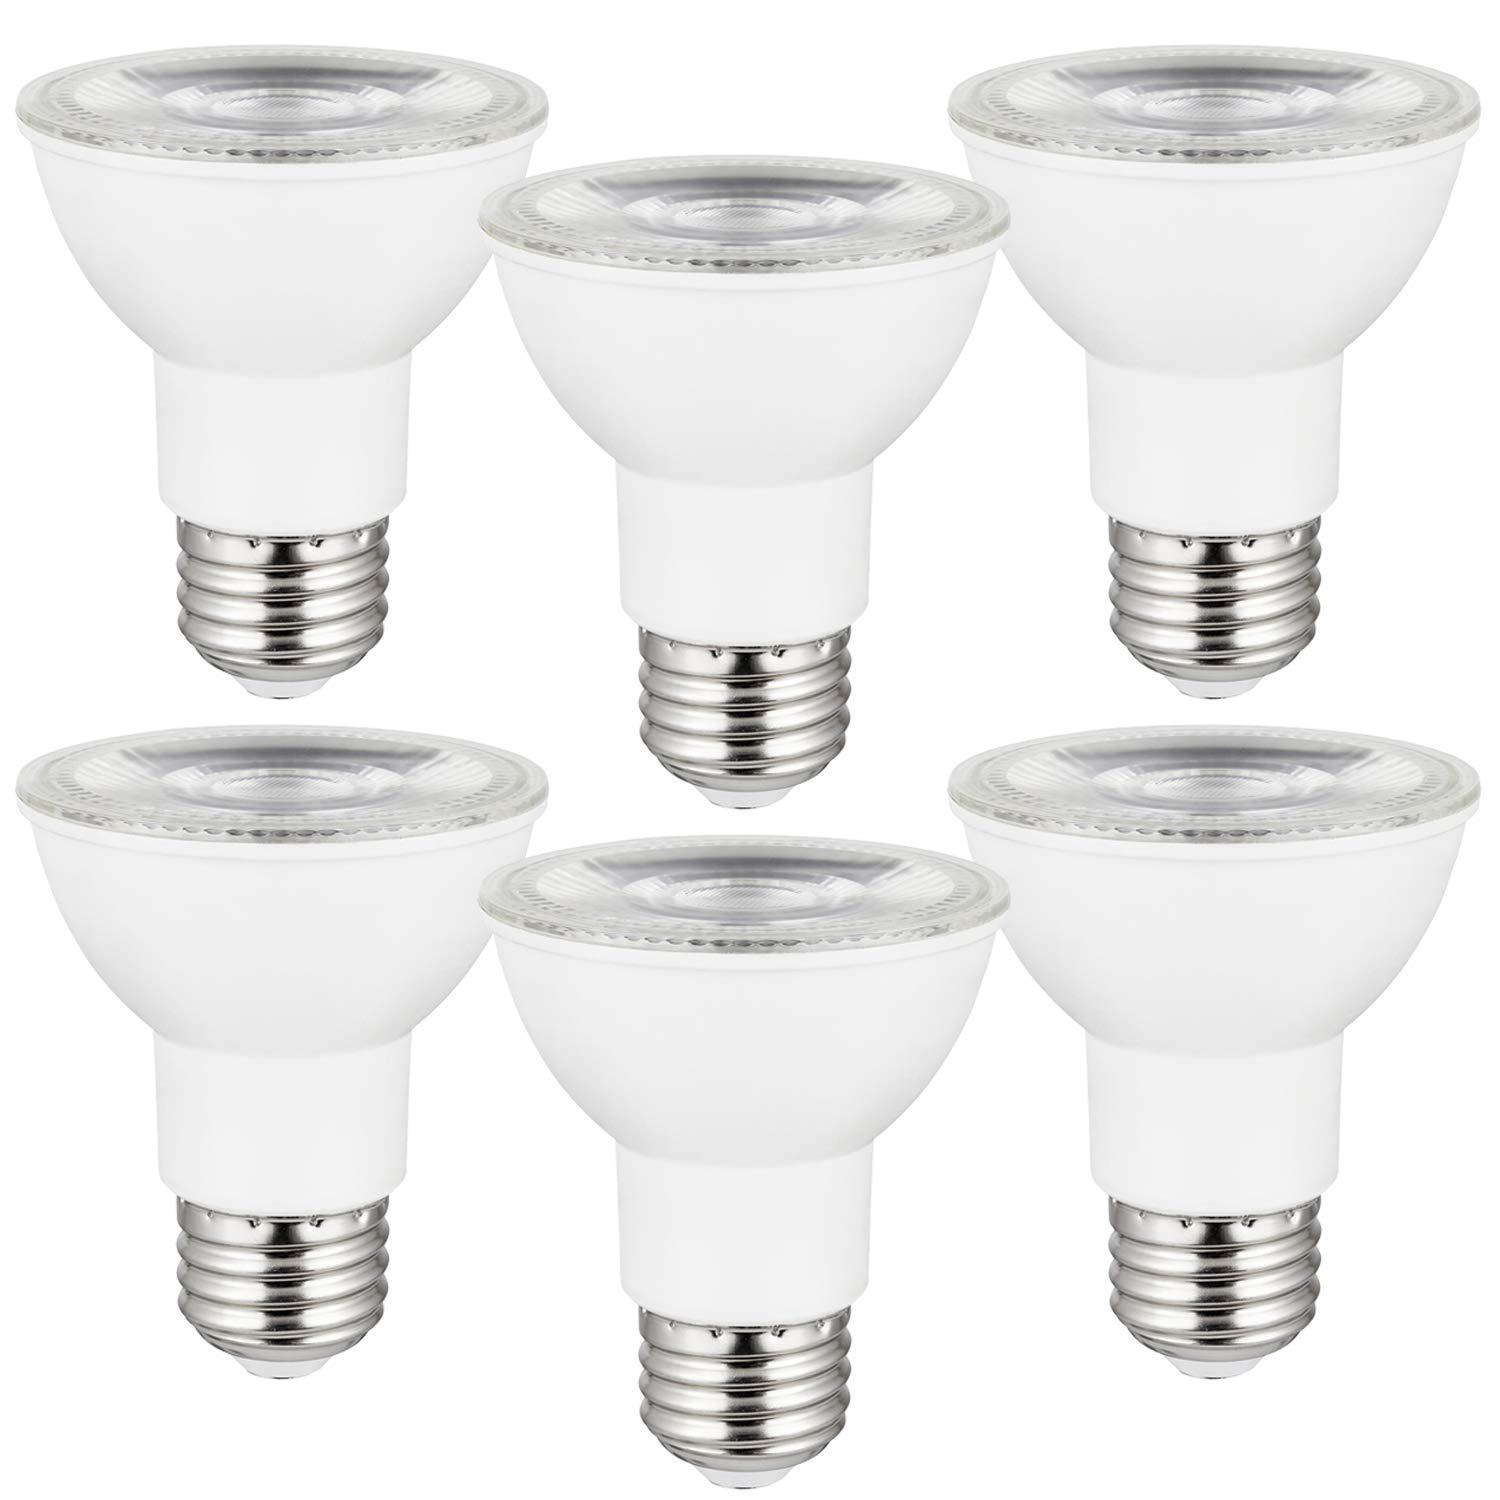 sunlite 41027-su led par20 reflector light bulb, 7 watts (50w equivalent), 520 lumens, medium e26 base, dimmable, spotlight, 